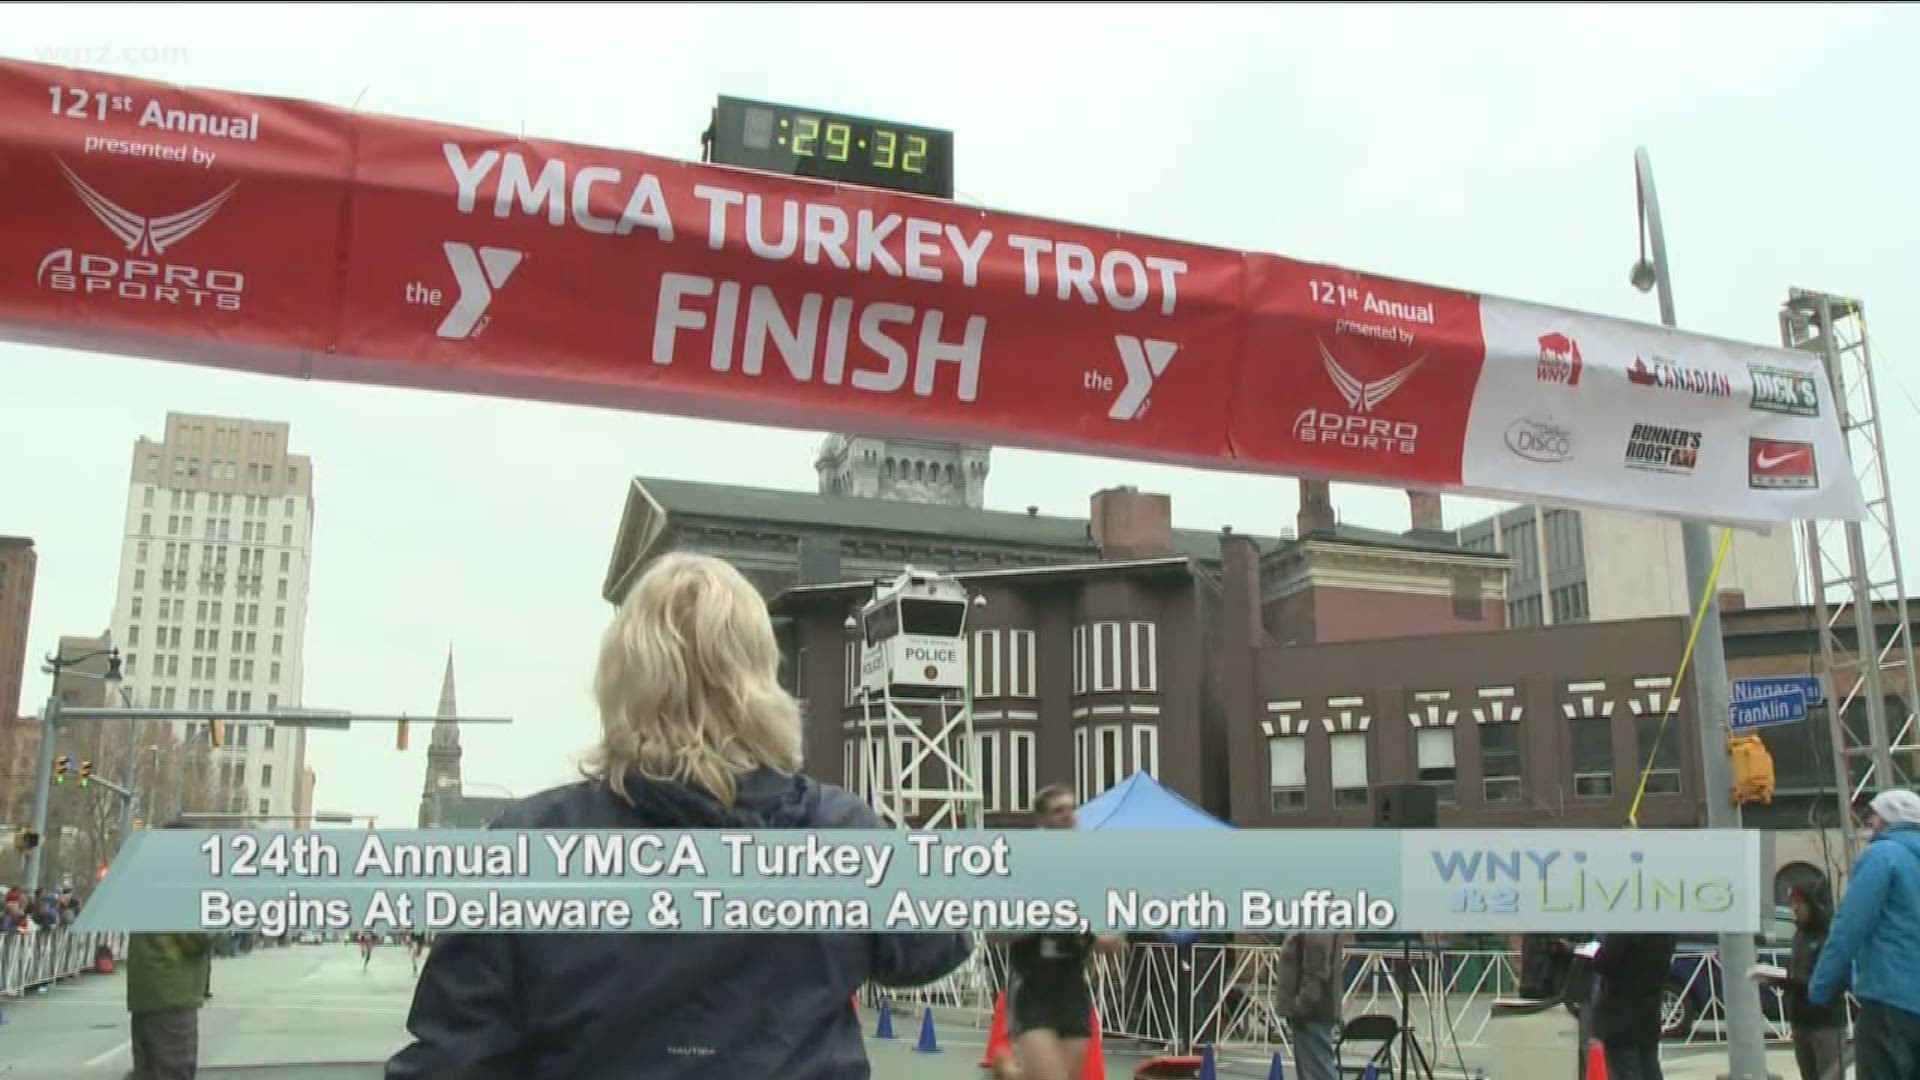 November 2 - YMCA Turkey Trot (THIS VIDEO IS SPONSORED BY THE YMCA TURKEY TROT)